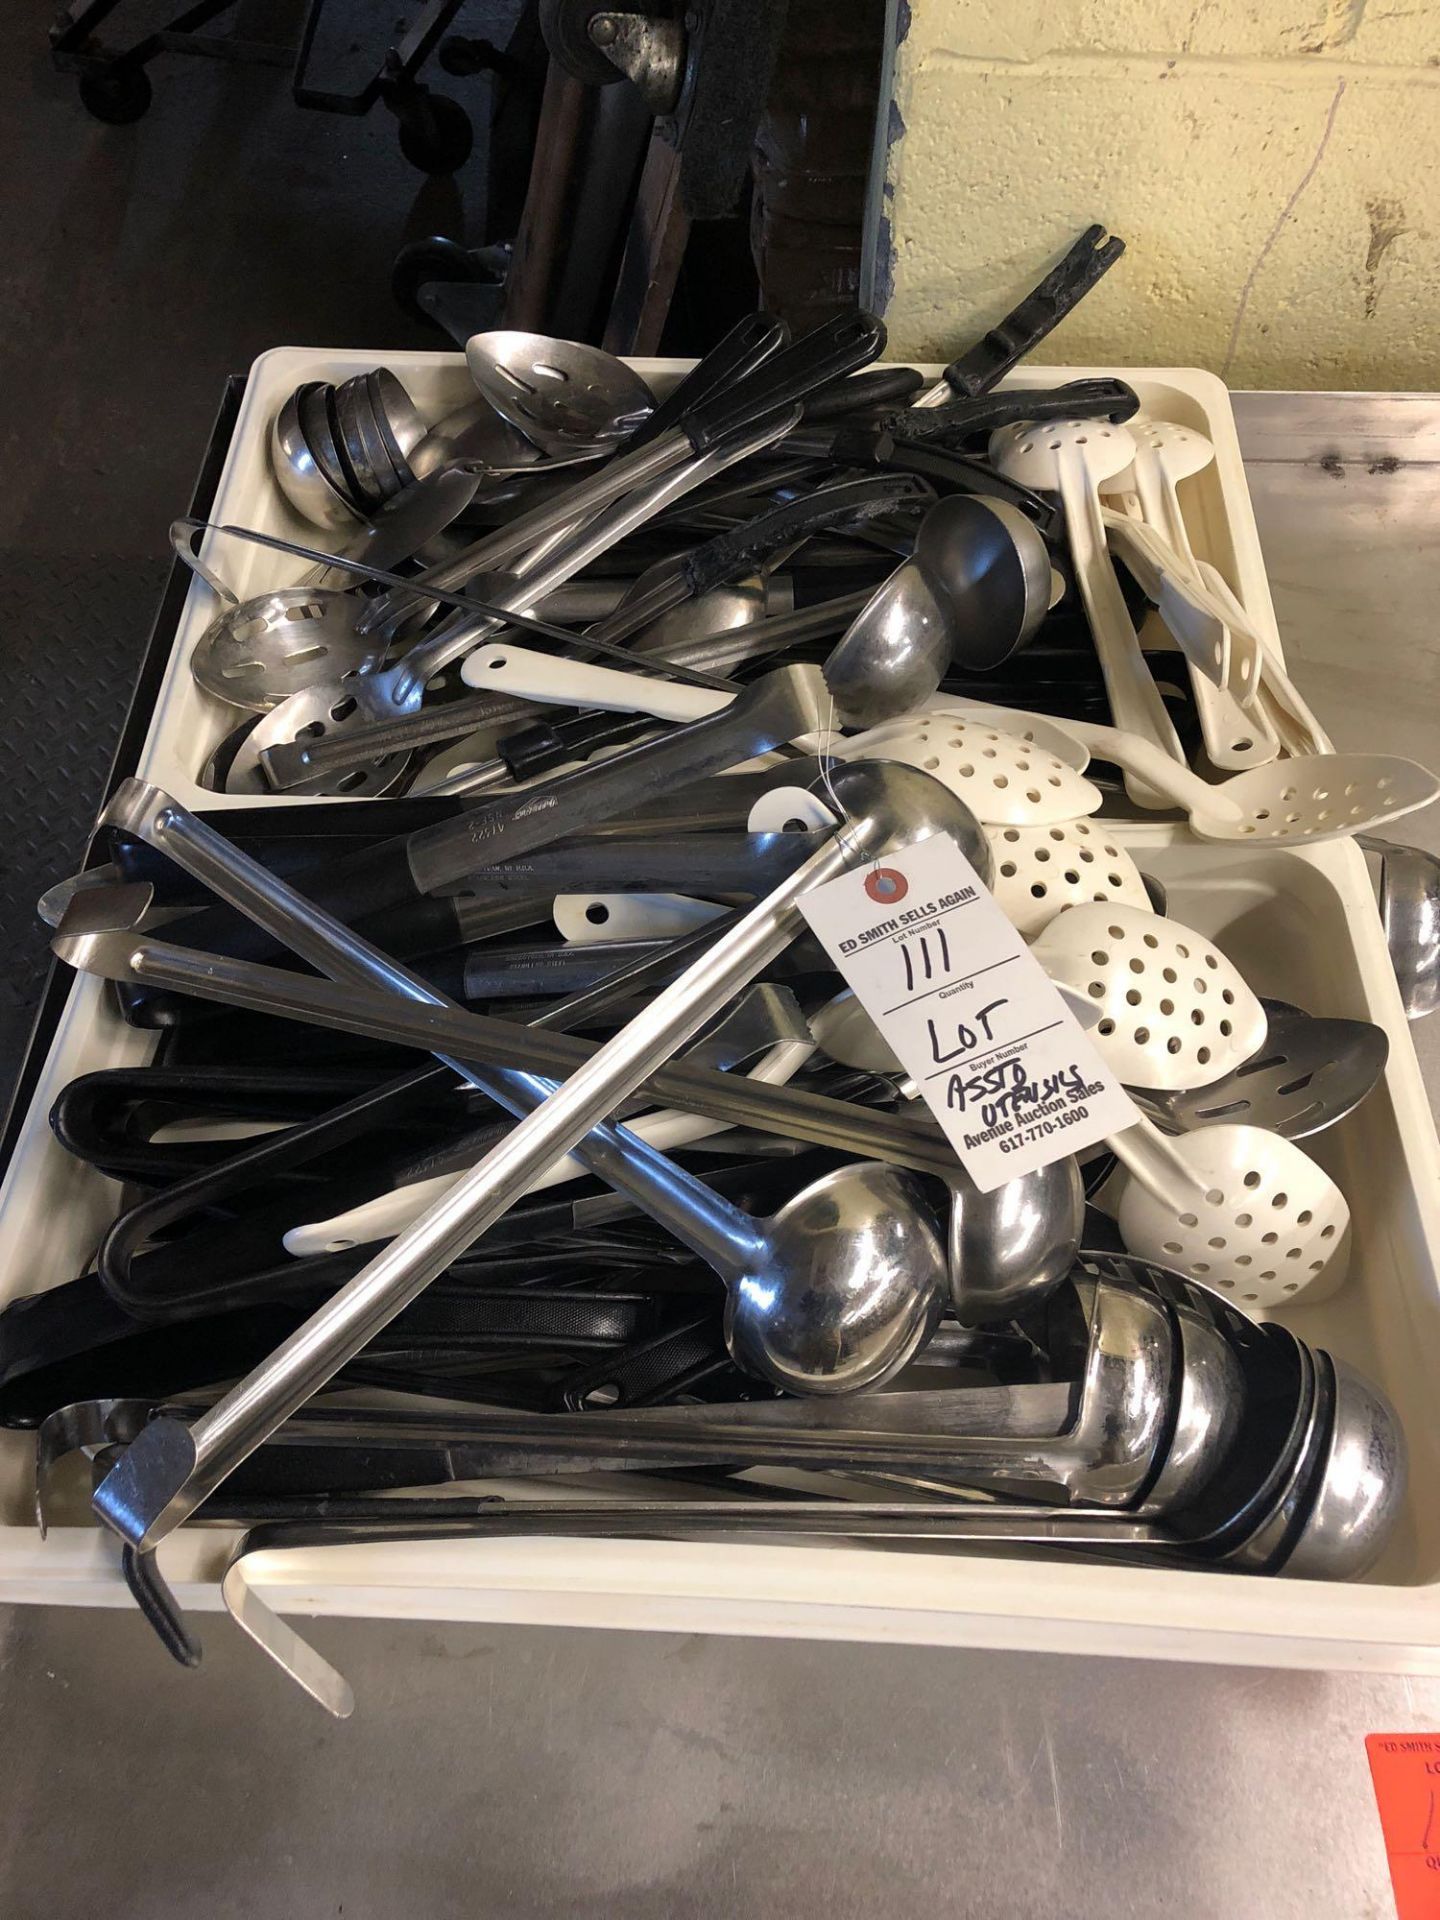 Lot assorted utensils